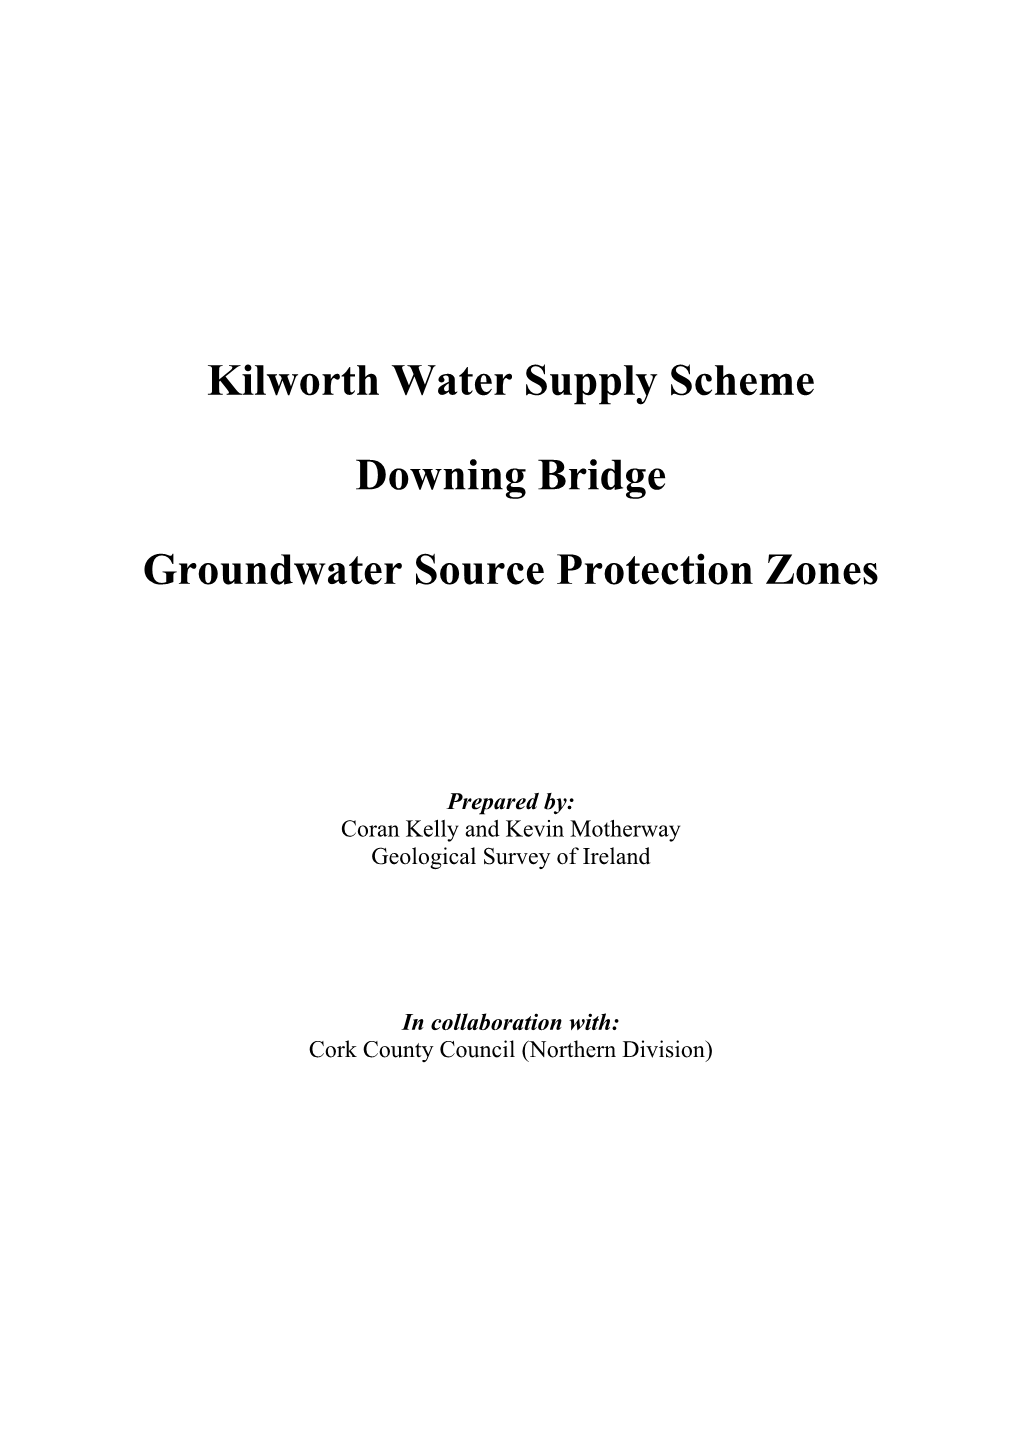 Kilworth Water Supply Scheme Downing Bridge Groundwater